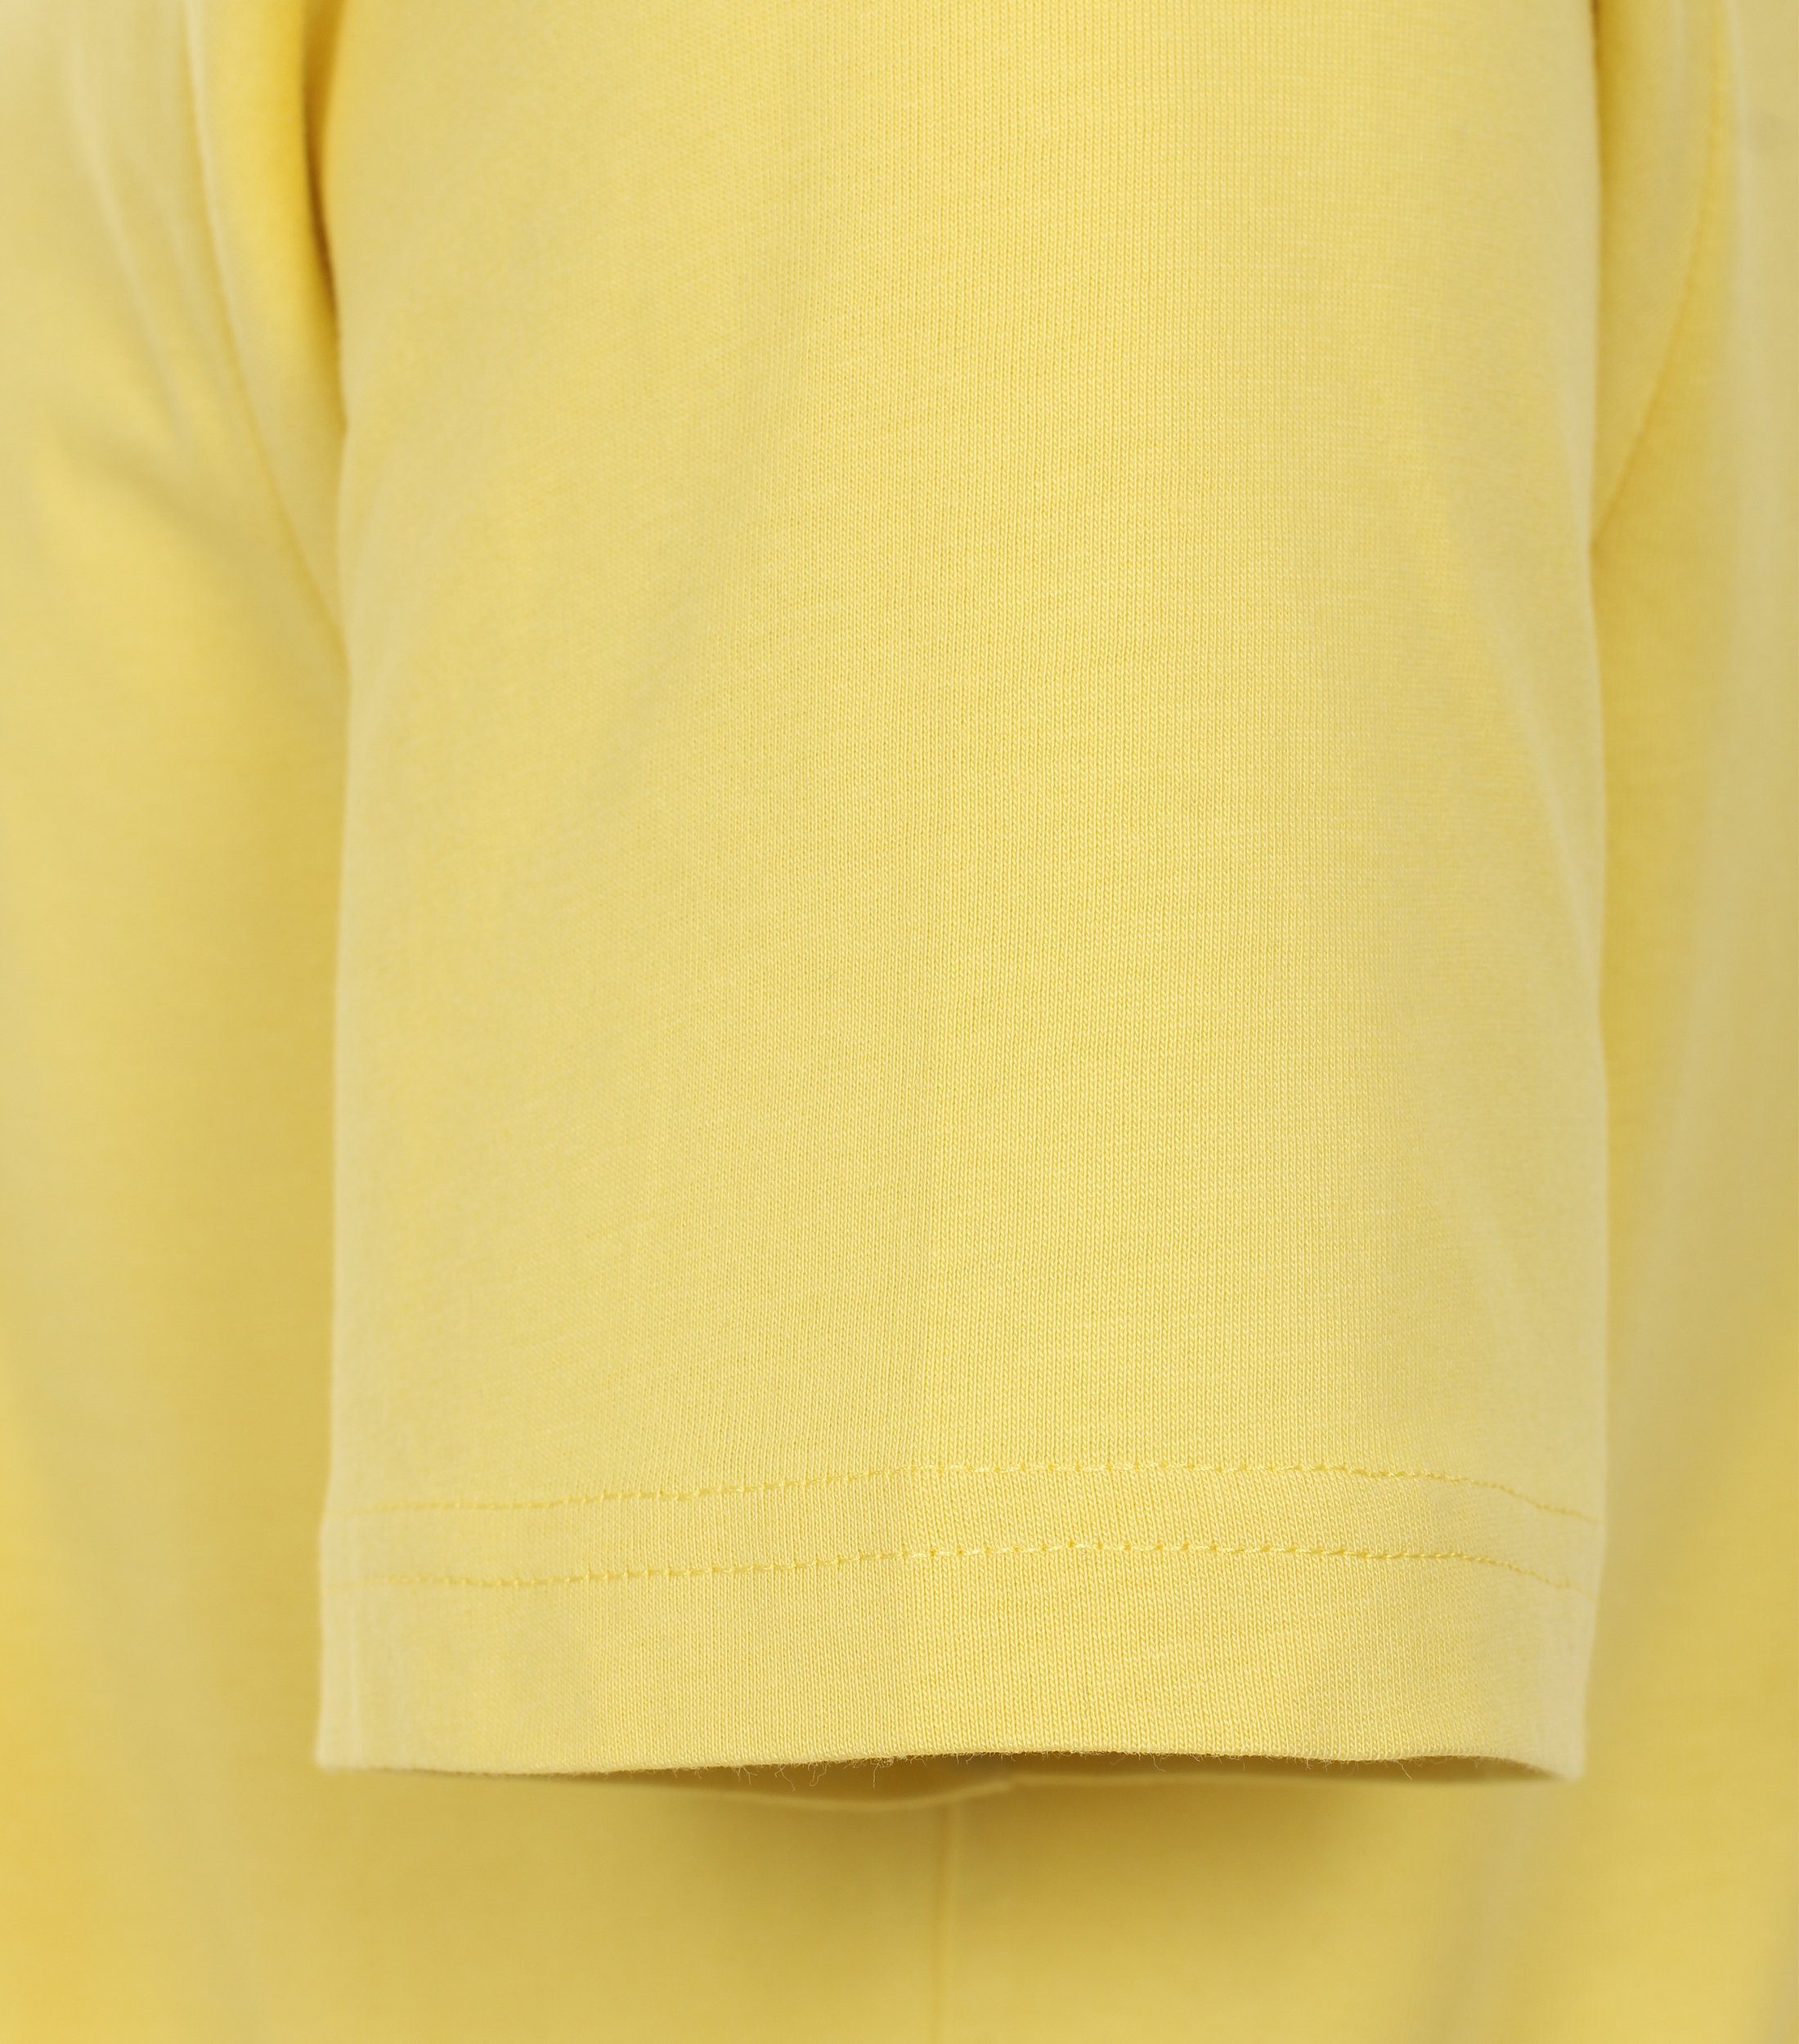 gelb T-Shirt 40 Muster Redmond andere